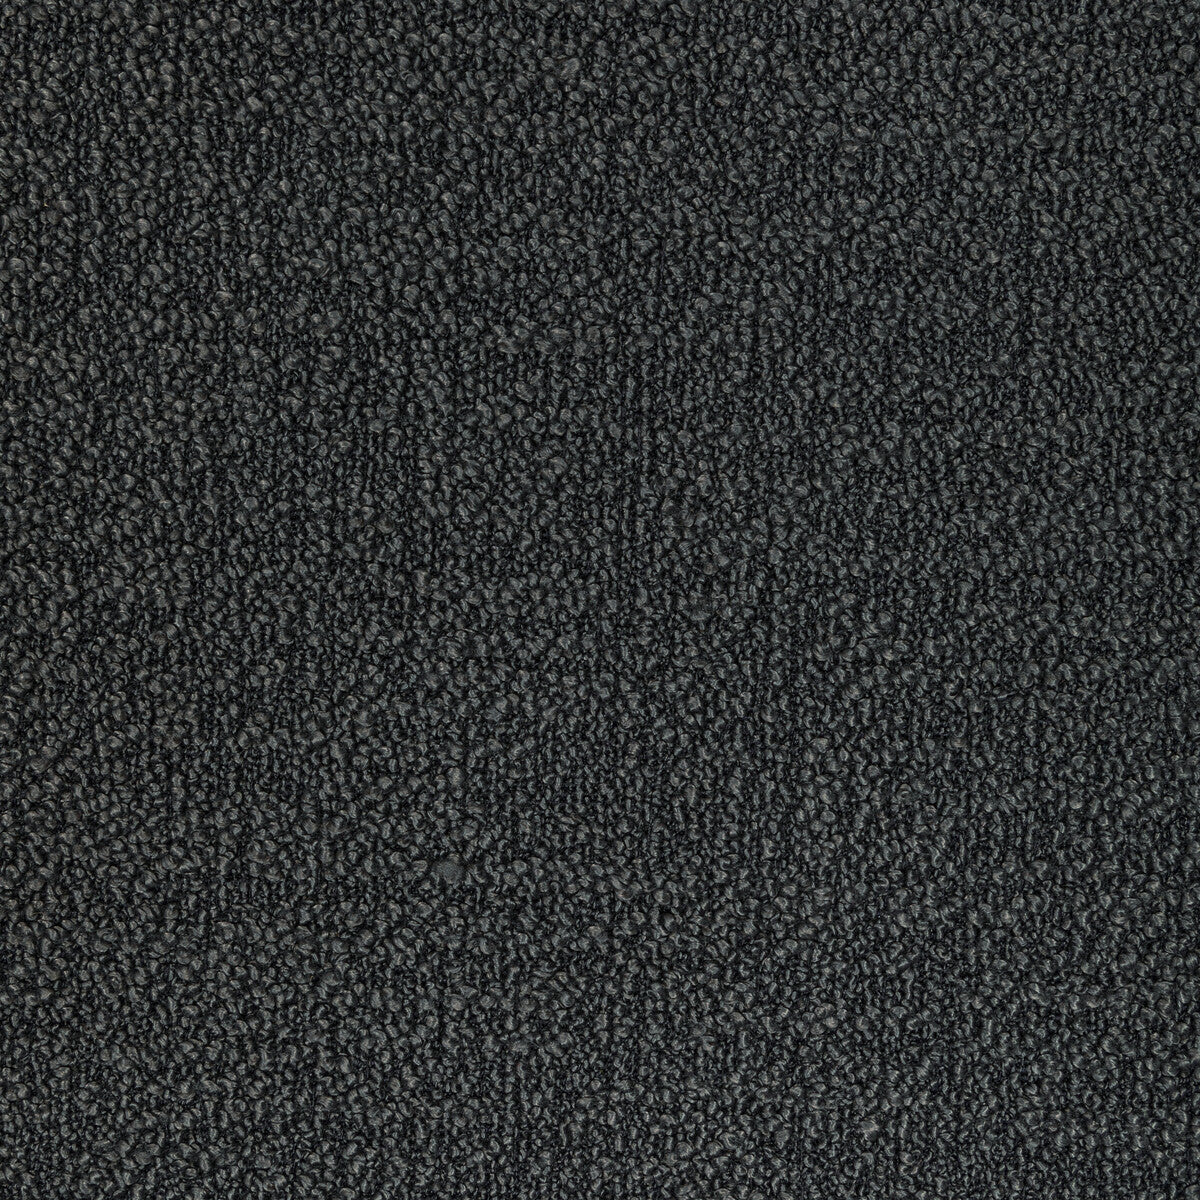 Kravet Smart fabric in 36857-21 color - pattern 36857.21.0 - by Kravet Smart in the Performance Kravetarmor collection